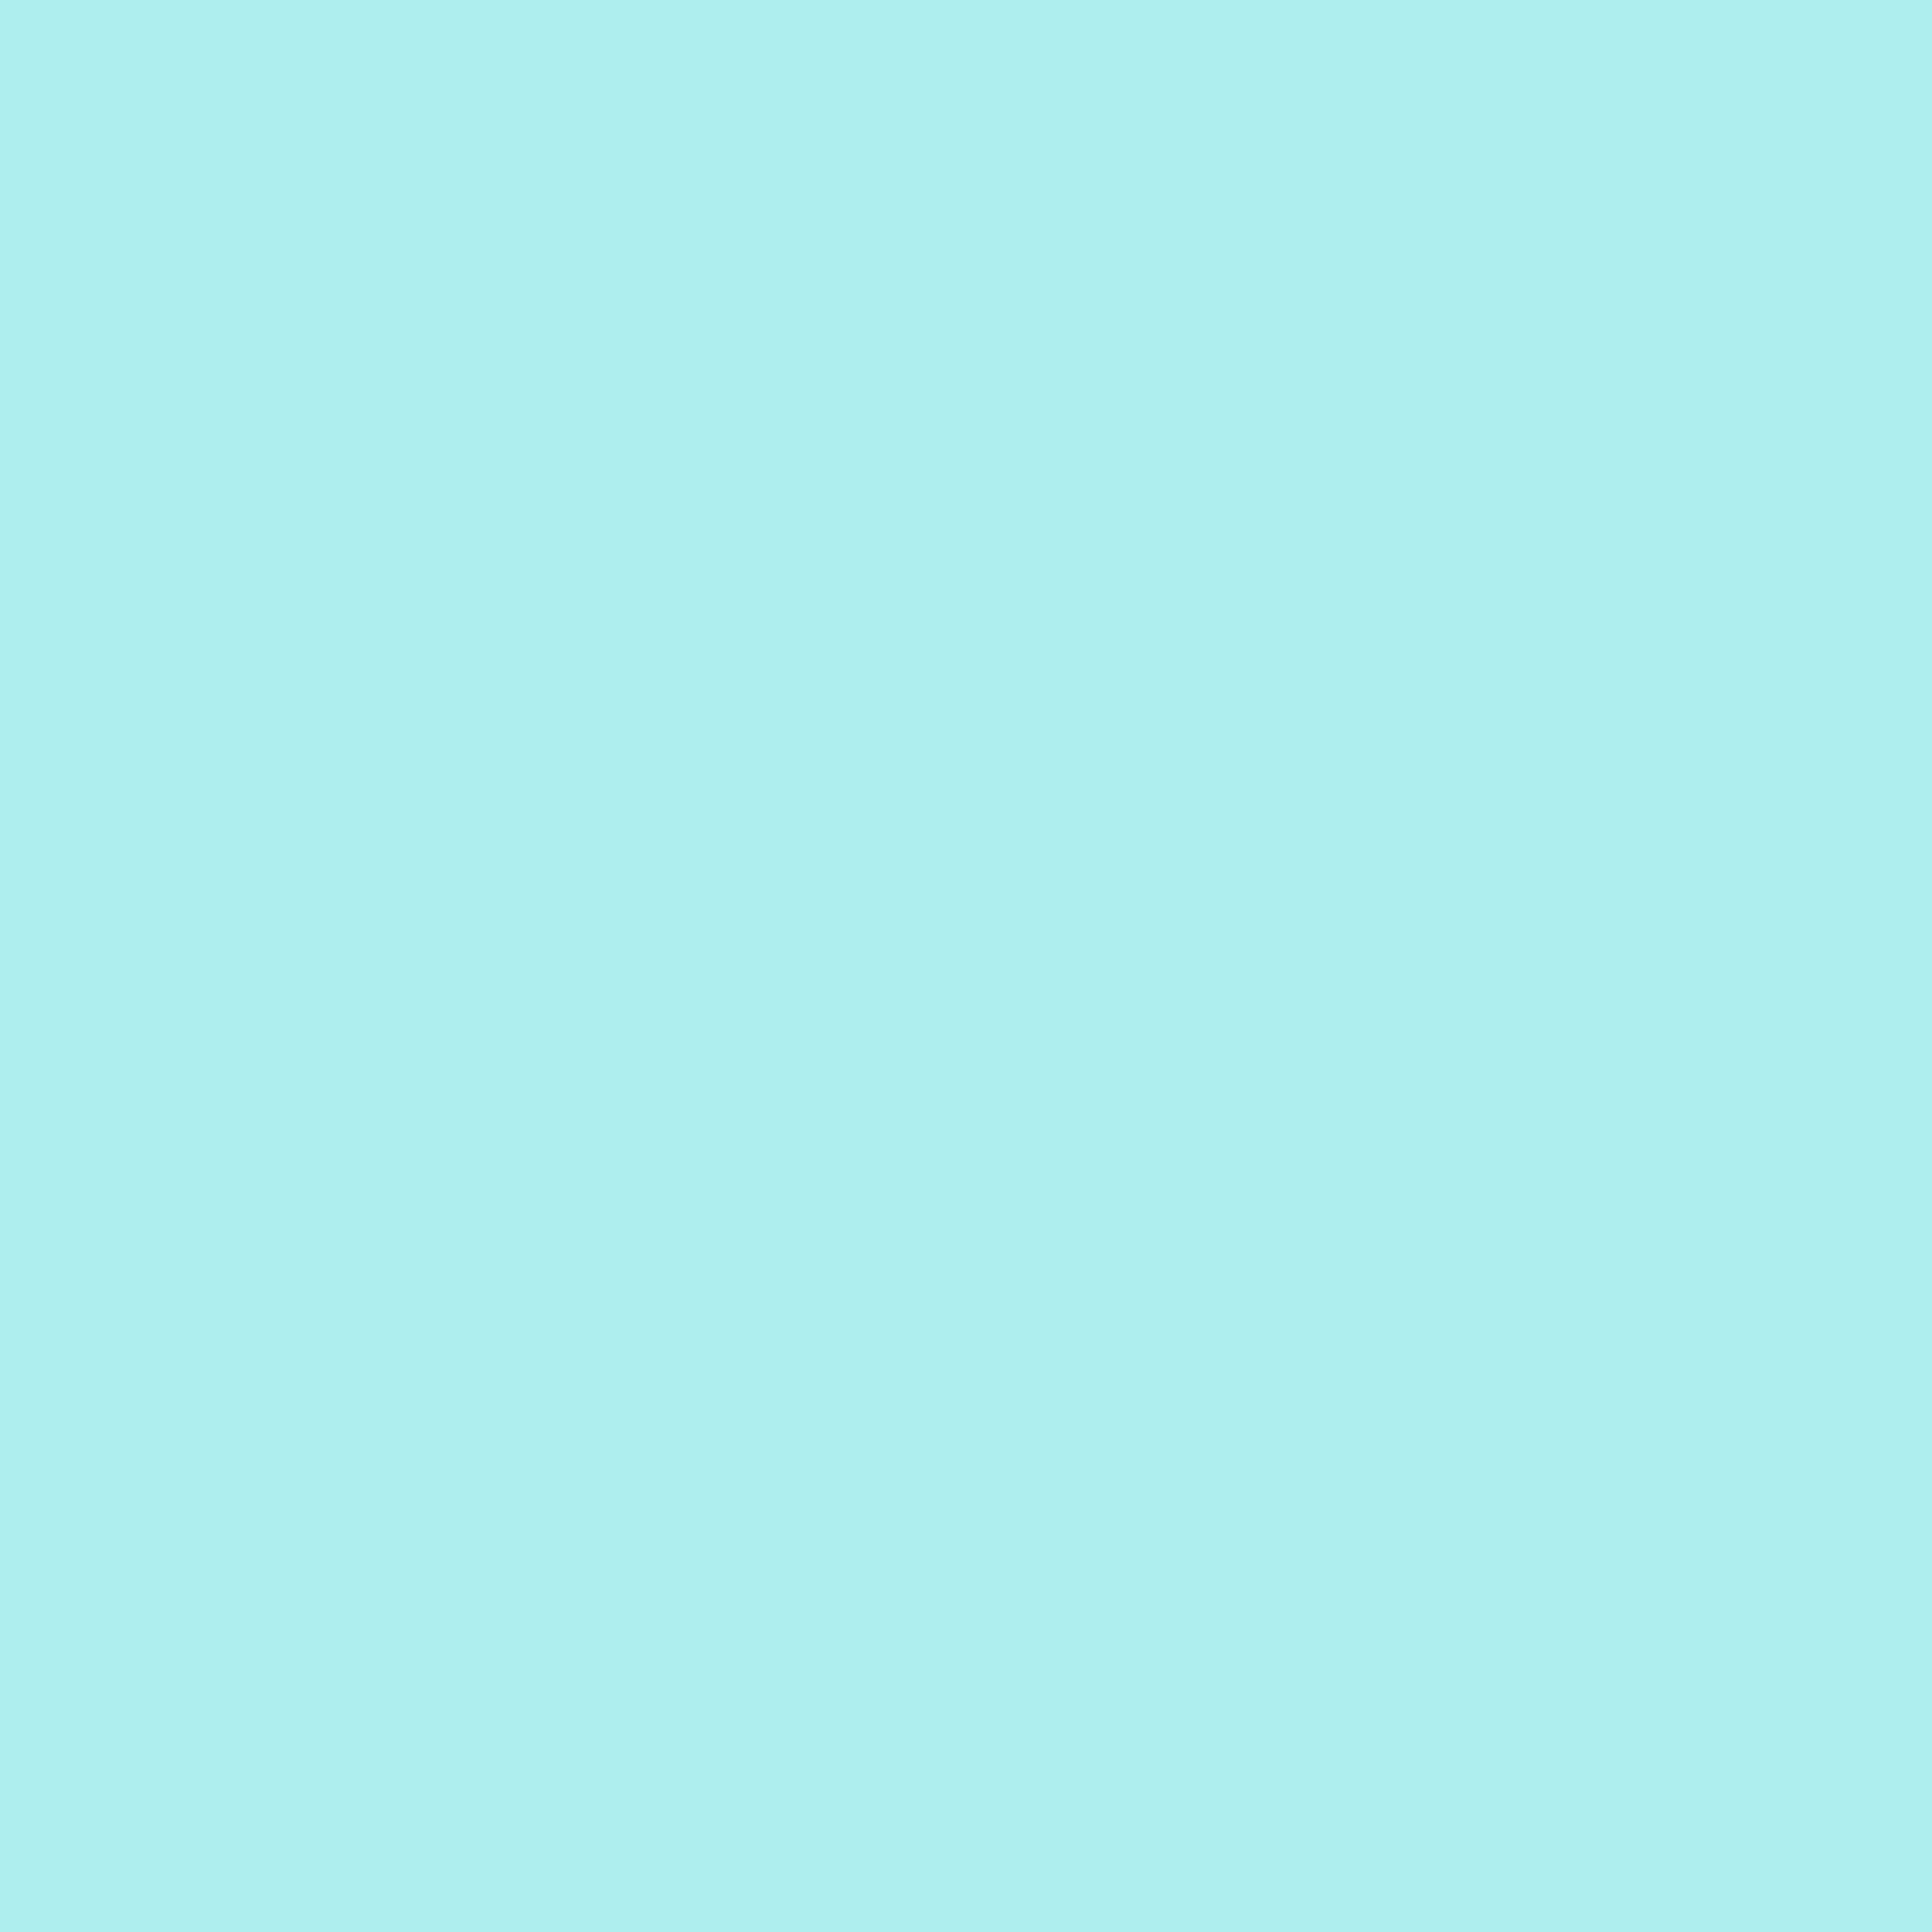 2732x2732 Pale Blue Solid Color Background